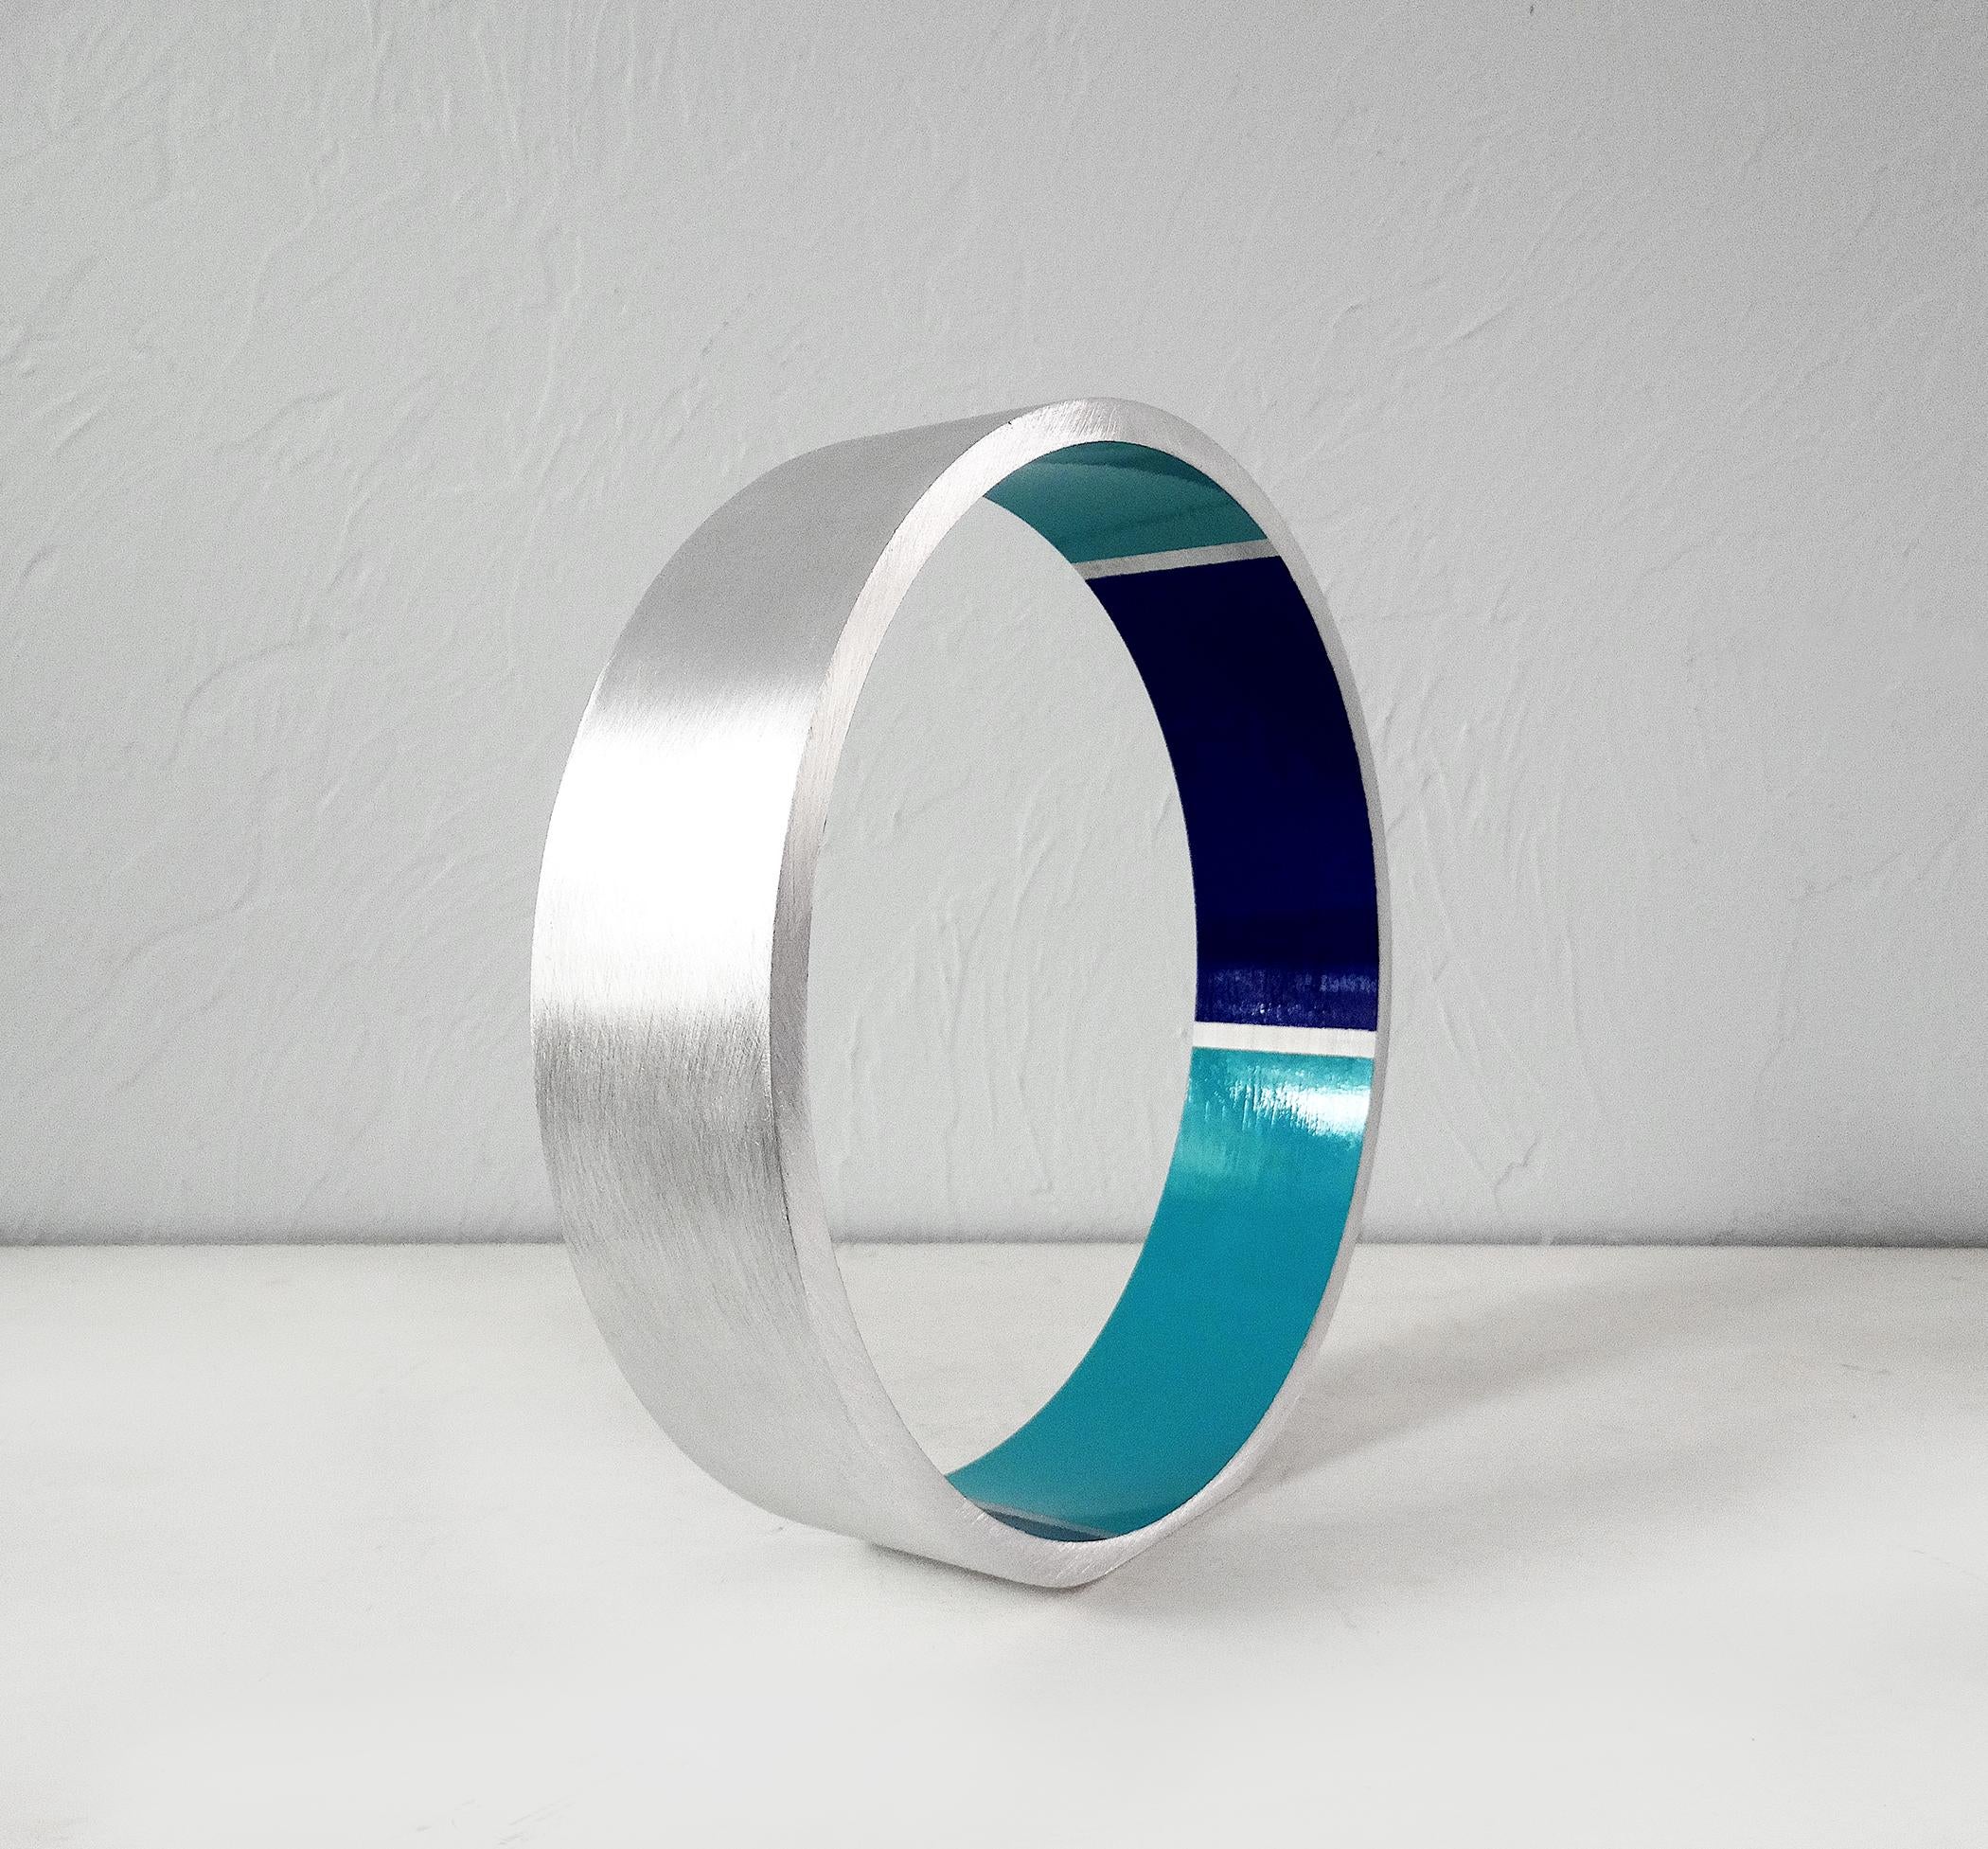 Transection (turquoise/dark blue) - Sculpture by KX2: Ruth Avra + Dana Kleinman